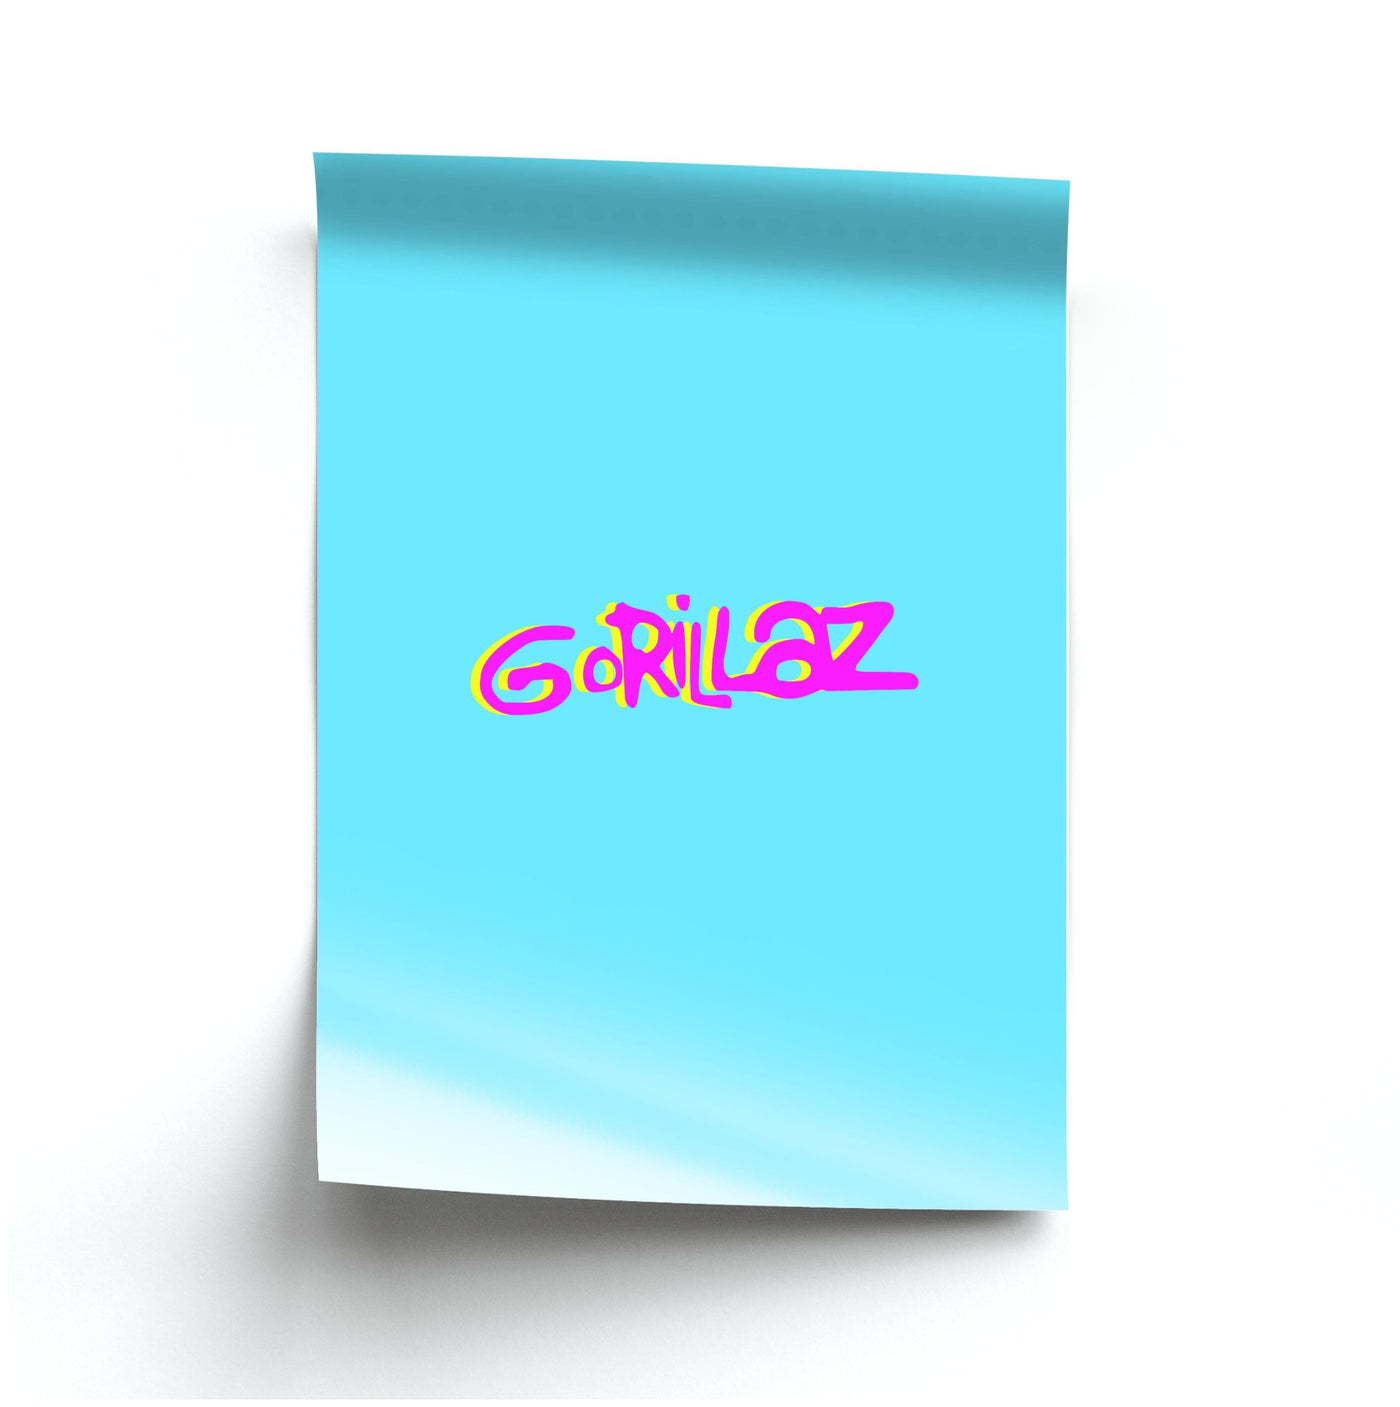 Title - Gorillaz Poster